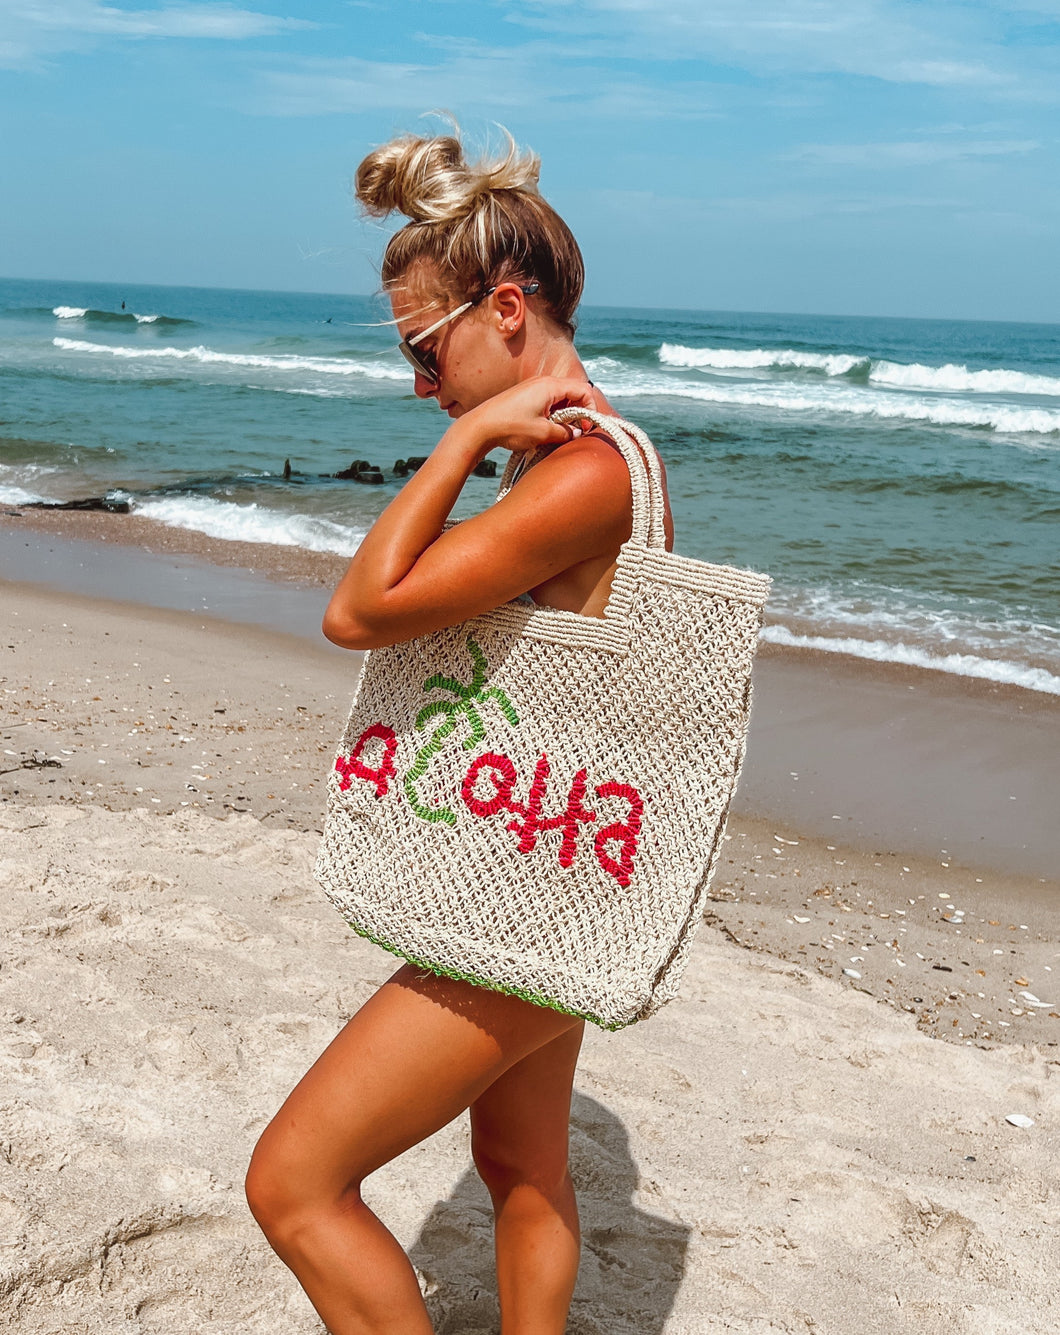 The Jacksons - Aloha Beach Bag